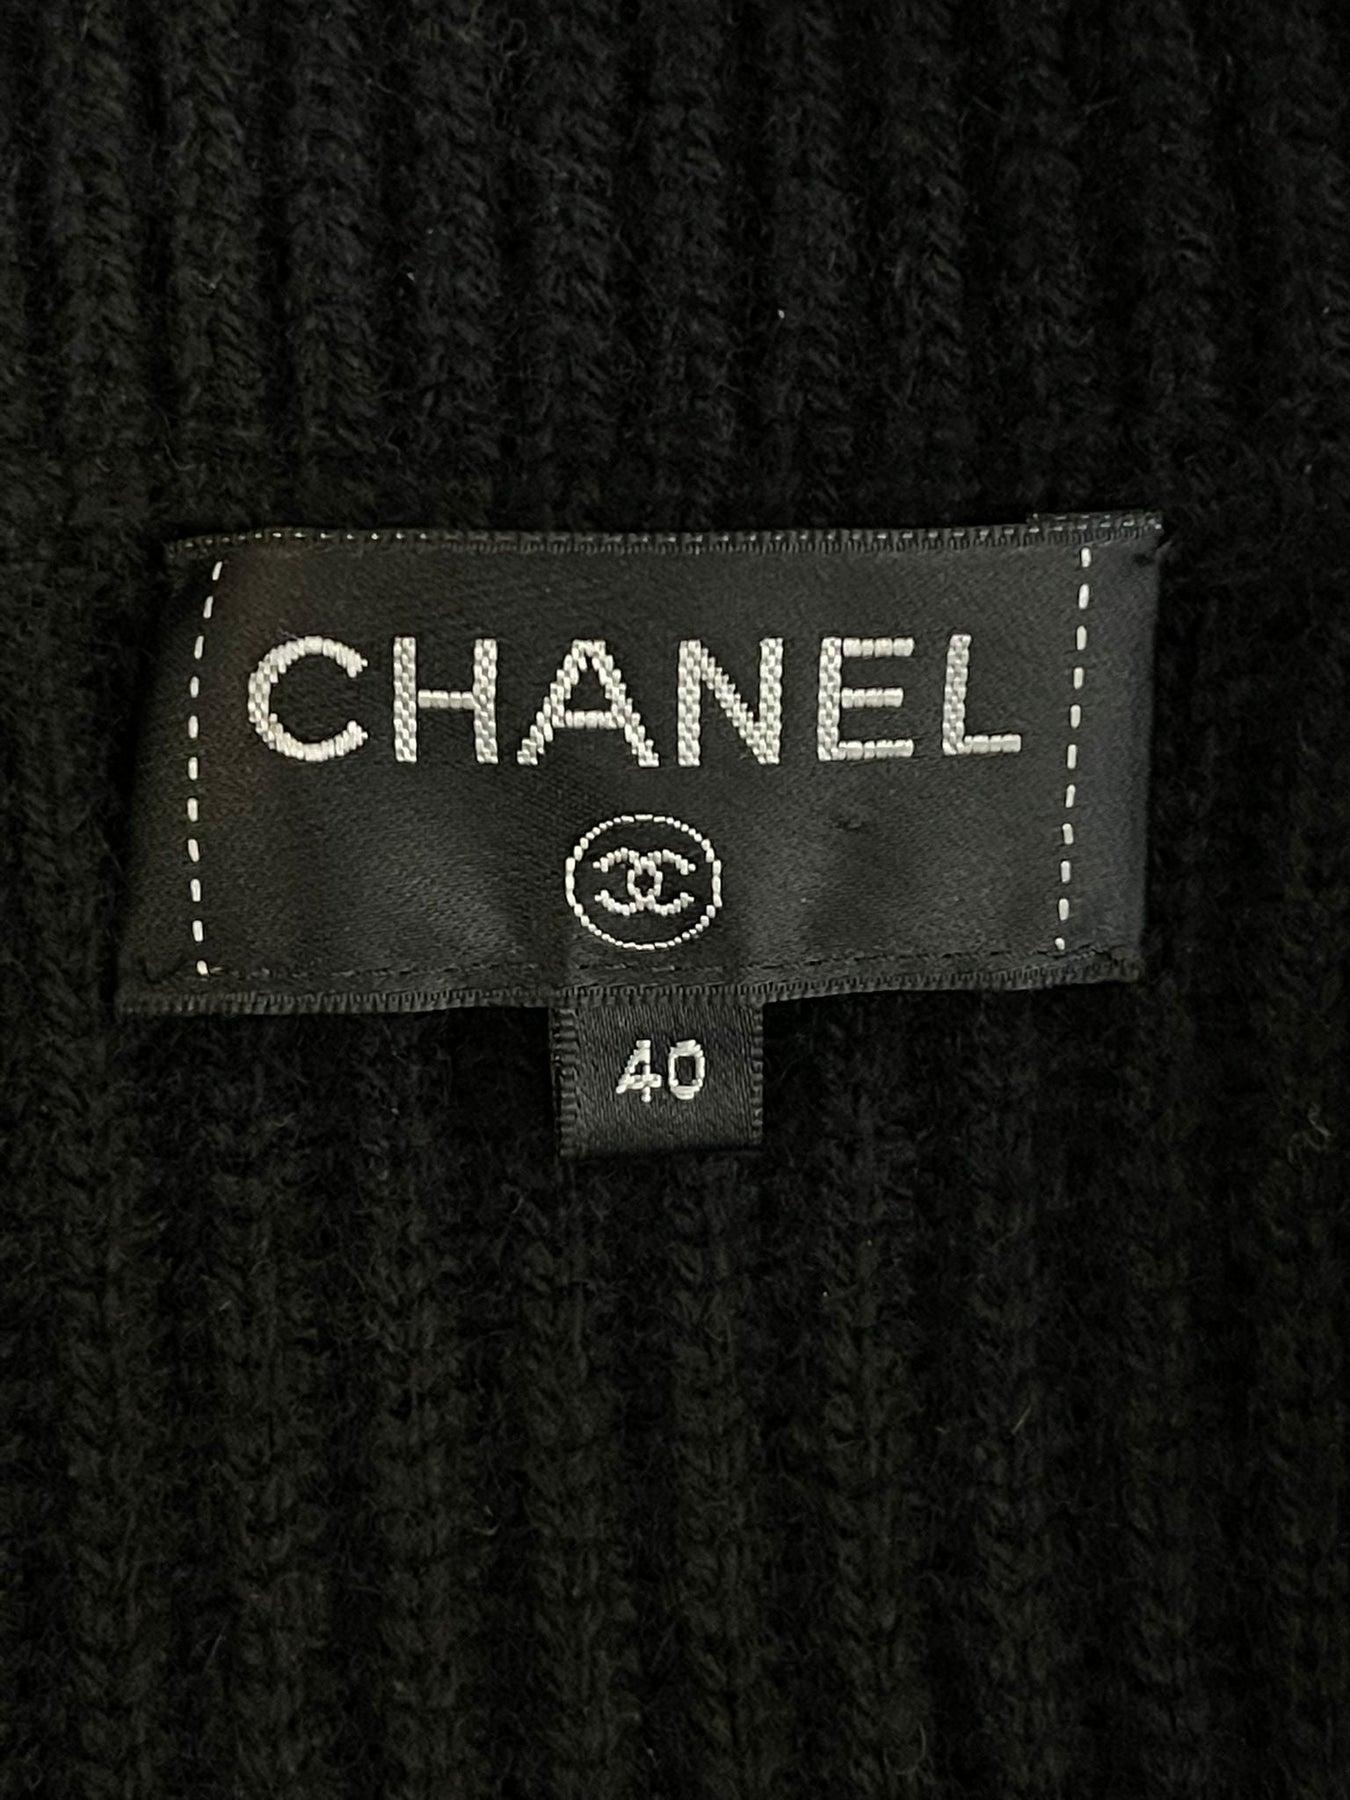 Chanel Cashmere Gabrielle Coco Cardi/Coat For Sale 3